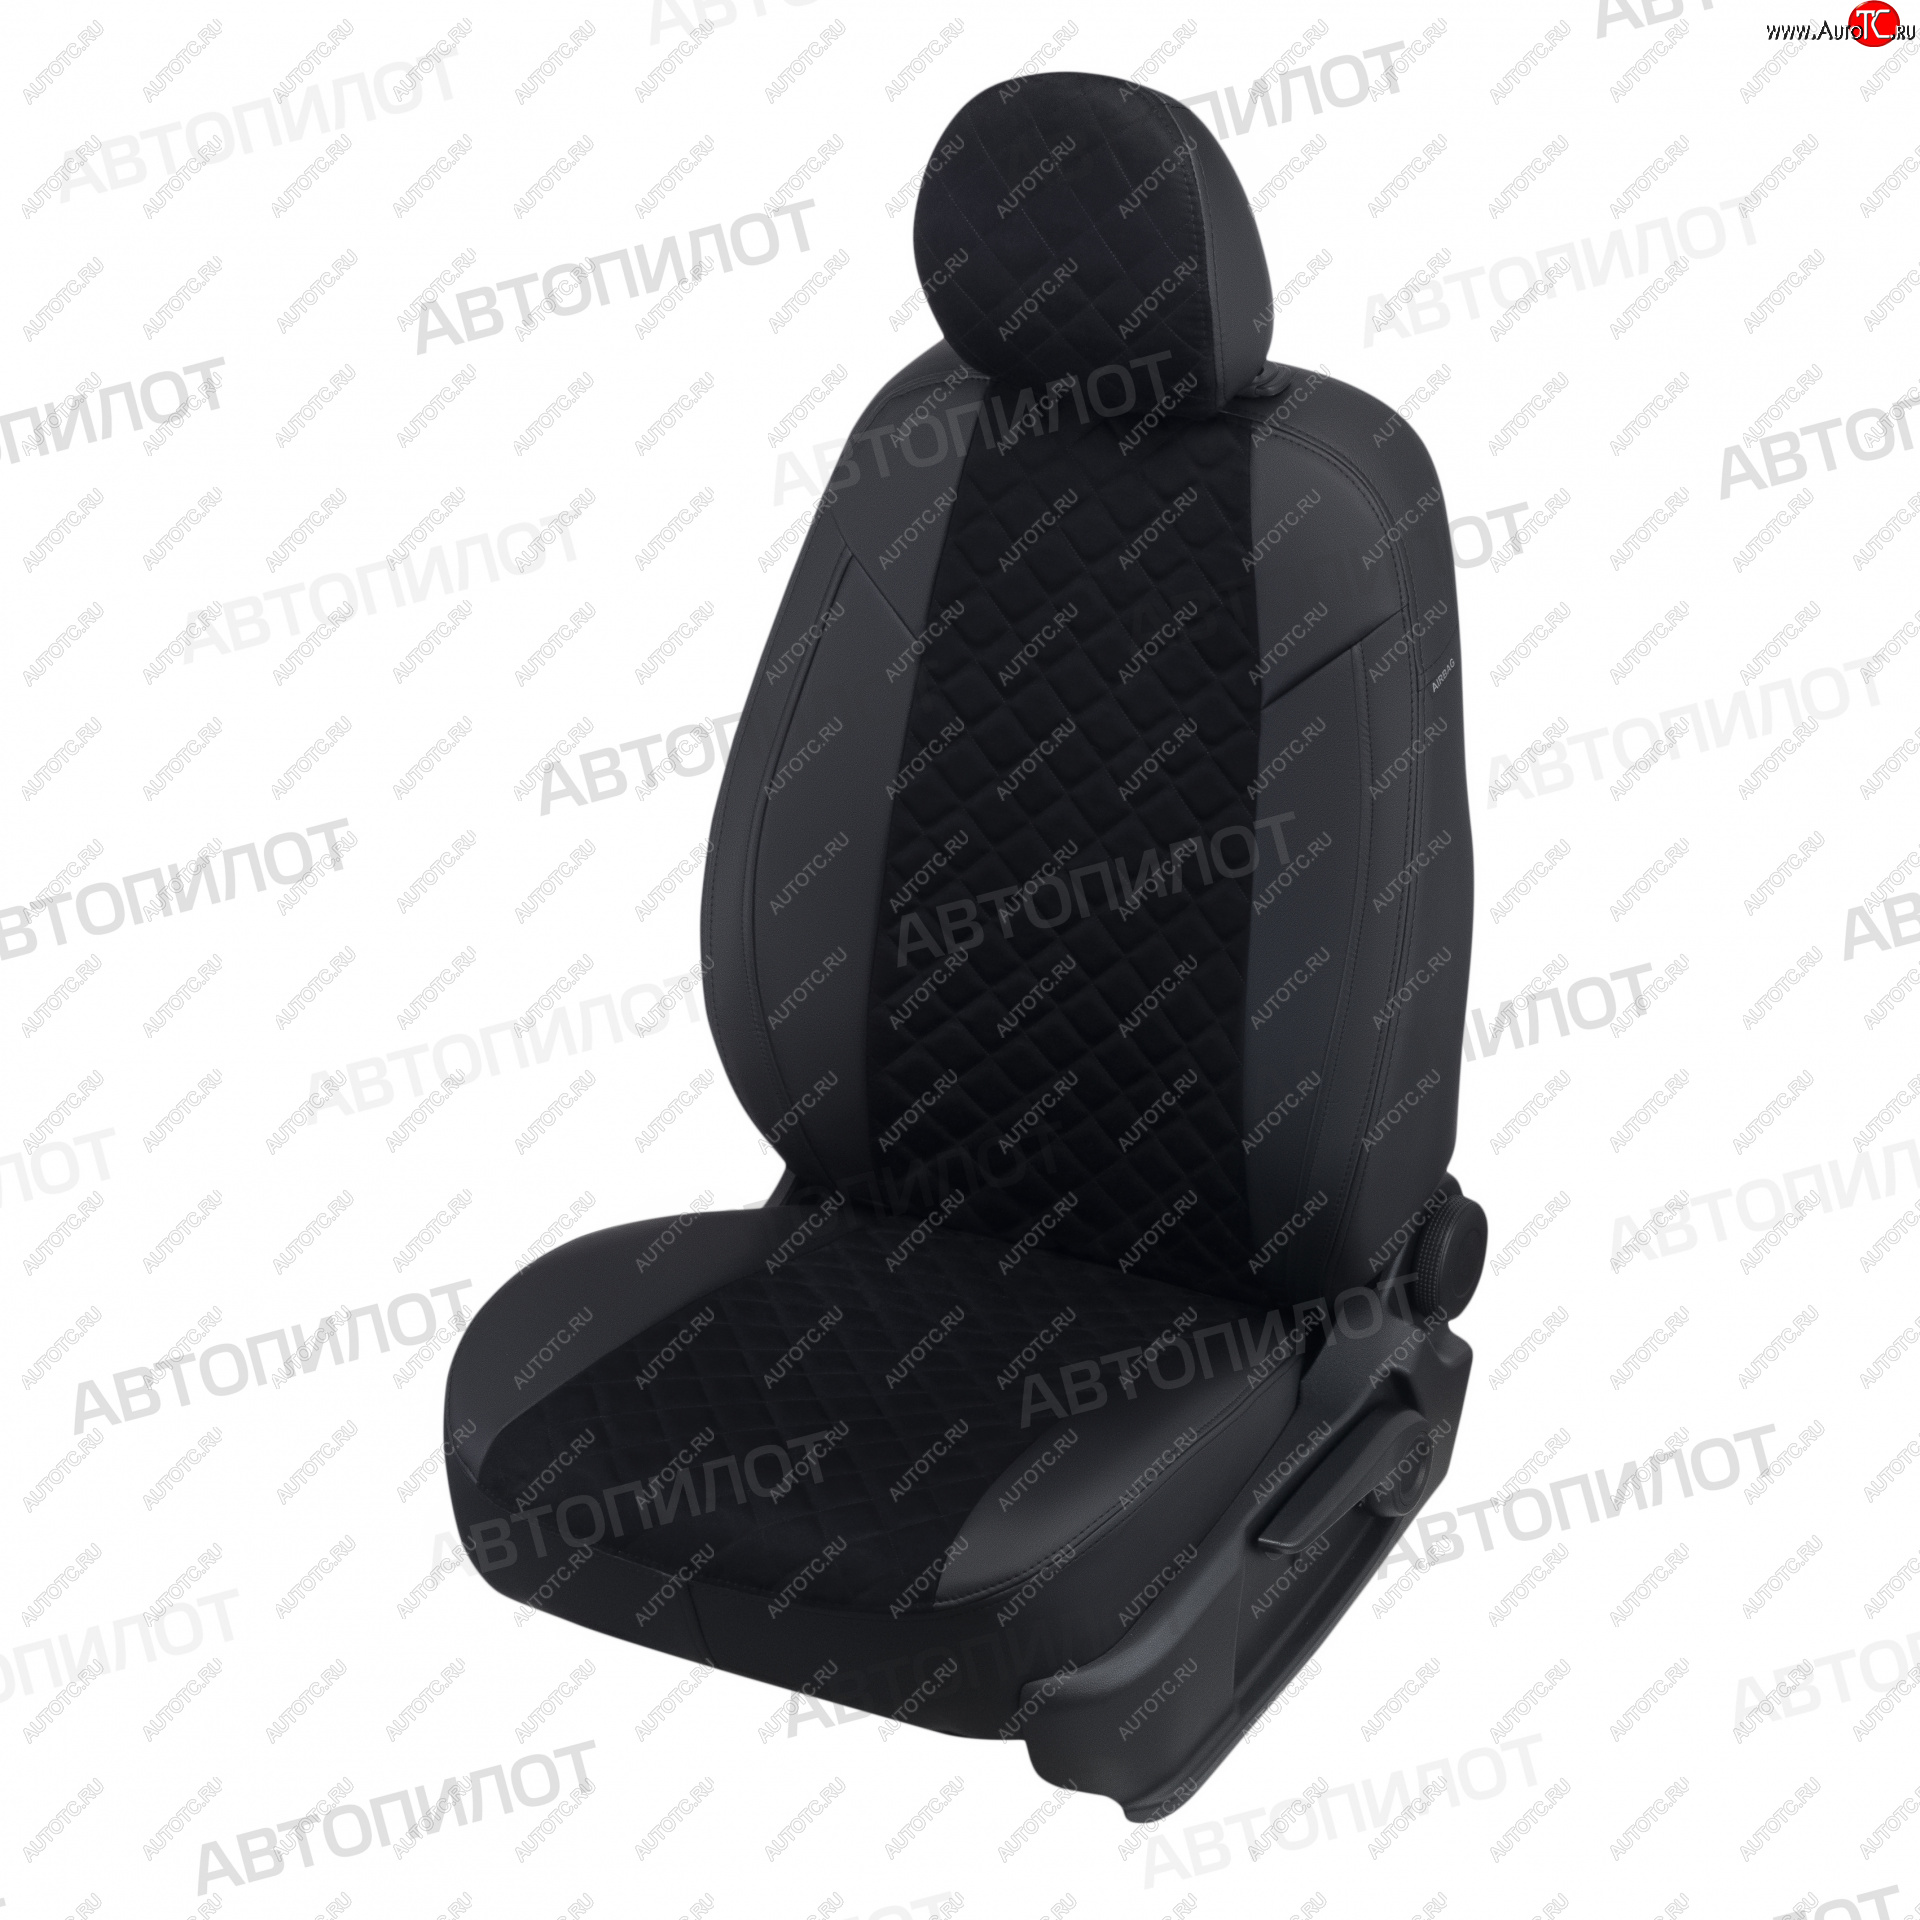 7 799 р. Чехлы сидений (экокожа/алькантара) Автопилот Ромб  KIA Sportage  3 SL (2010-2016) (черный)